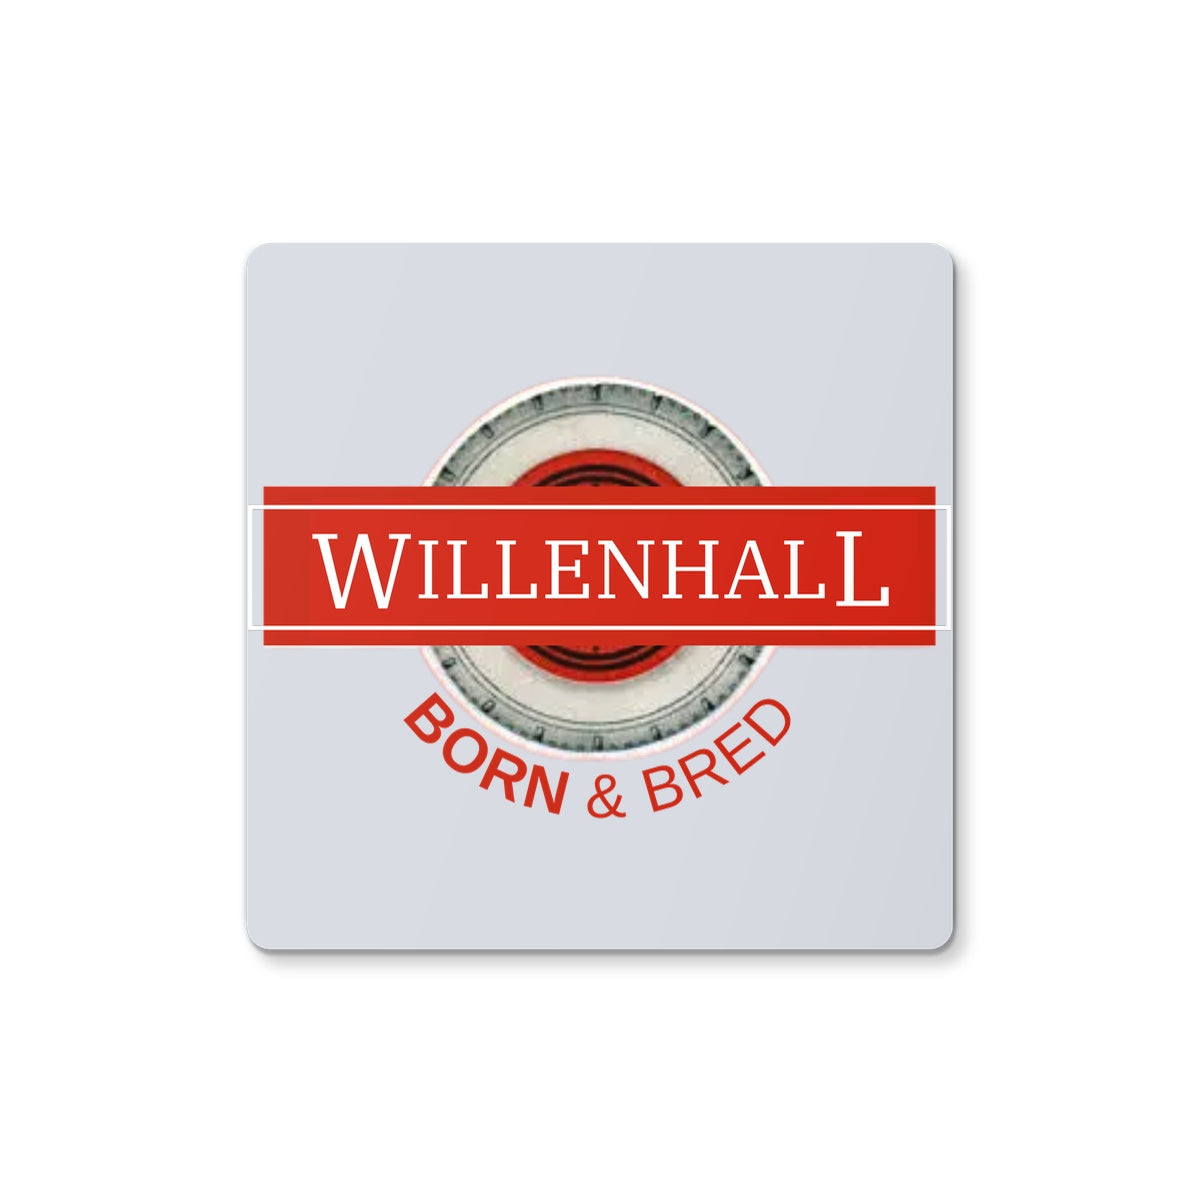 Willenhall BORN & BRED Coaster